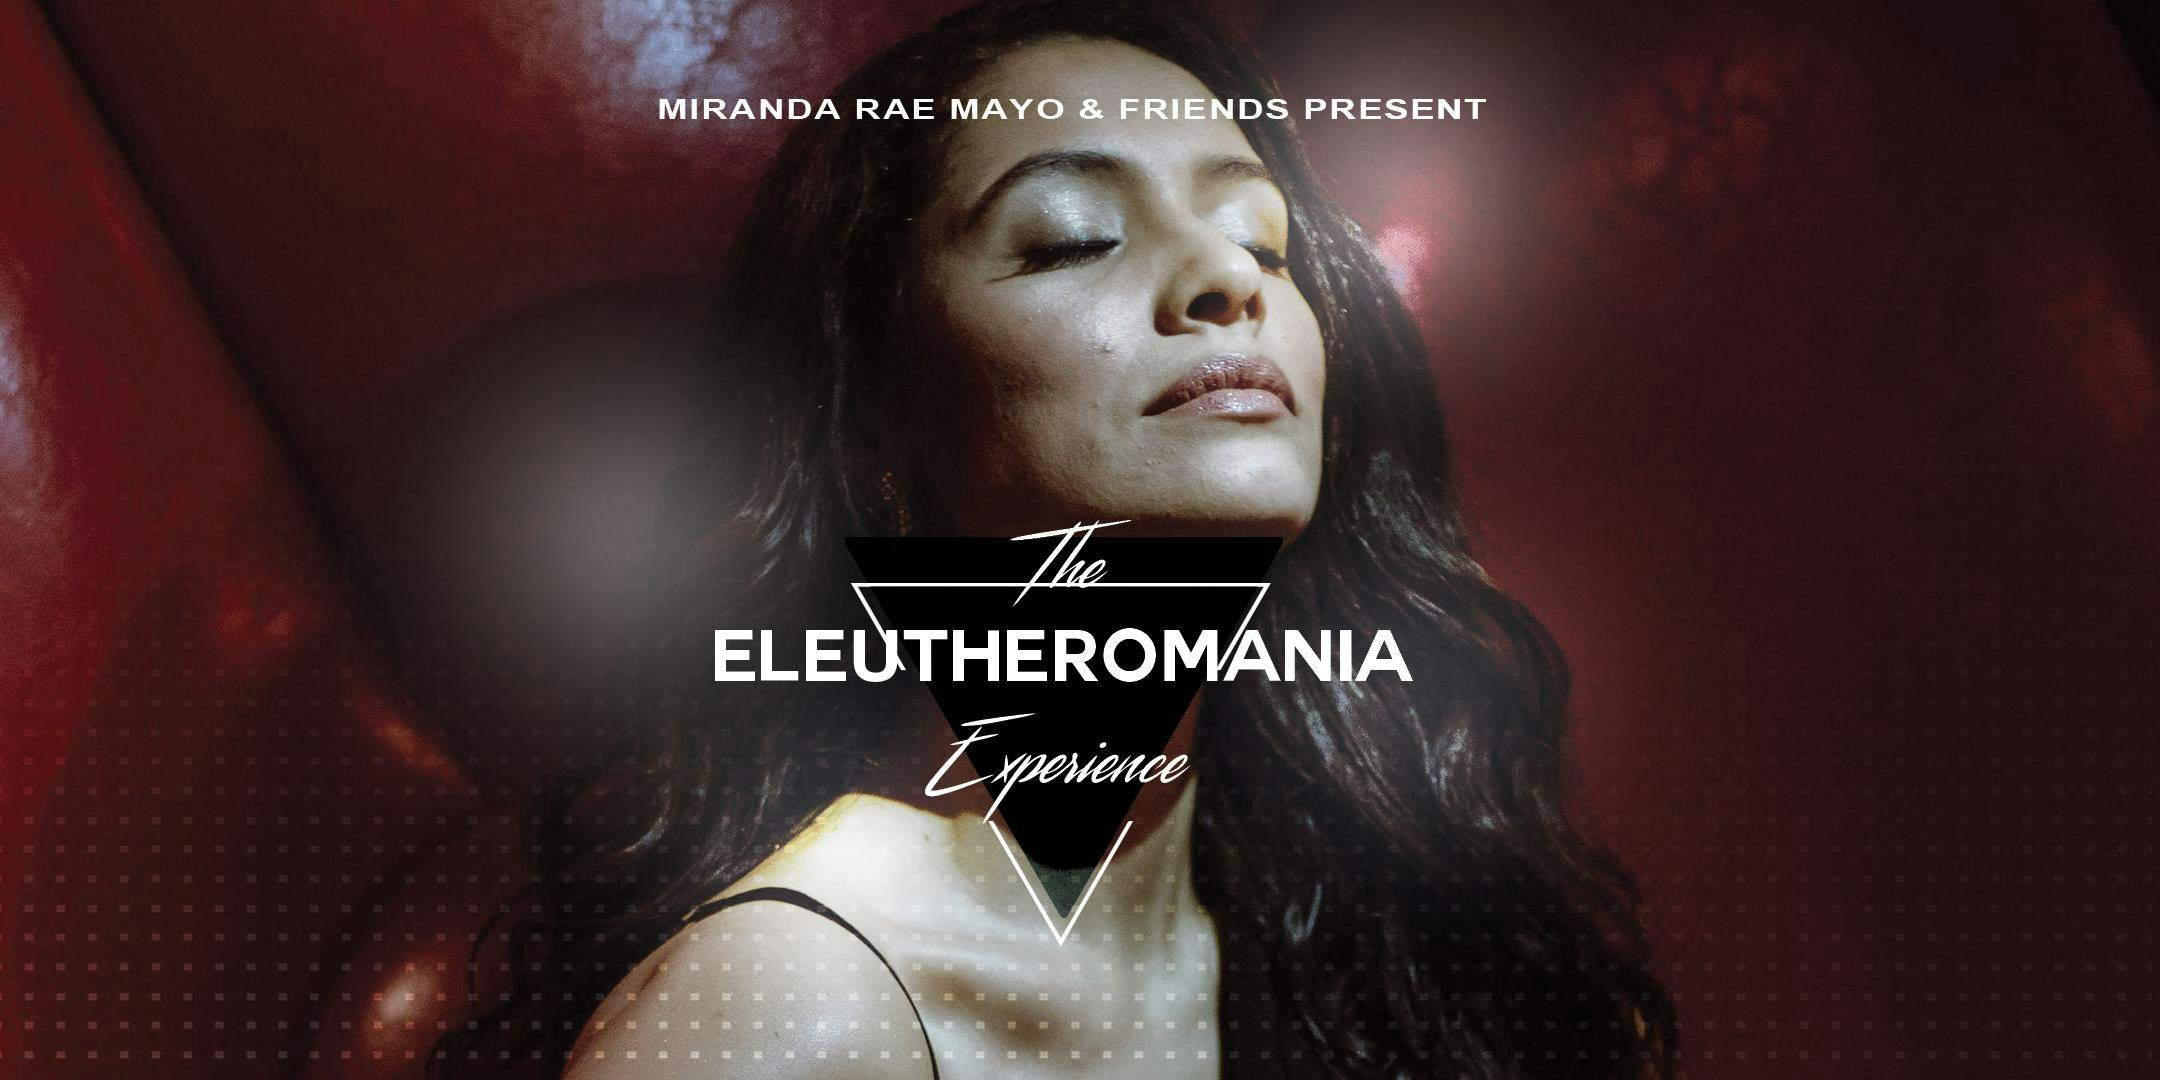 Bodega & Miranda Rae Mayo Present A Eleutheromania Experience